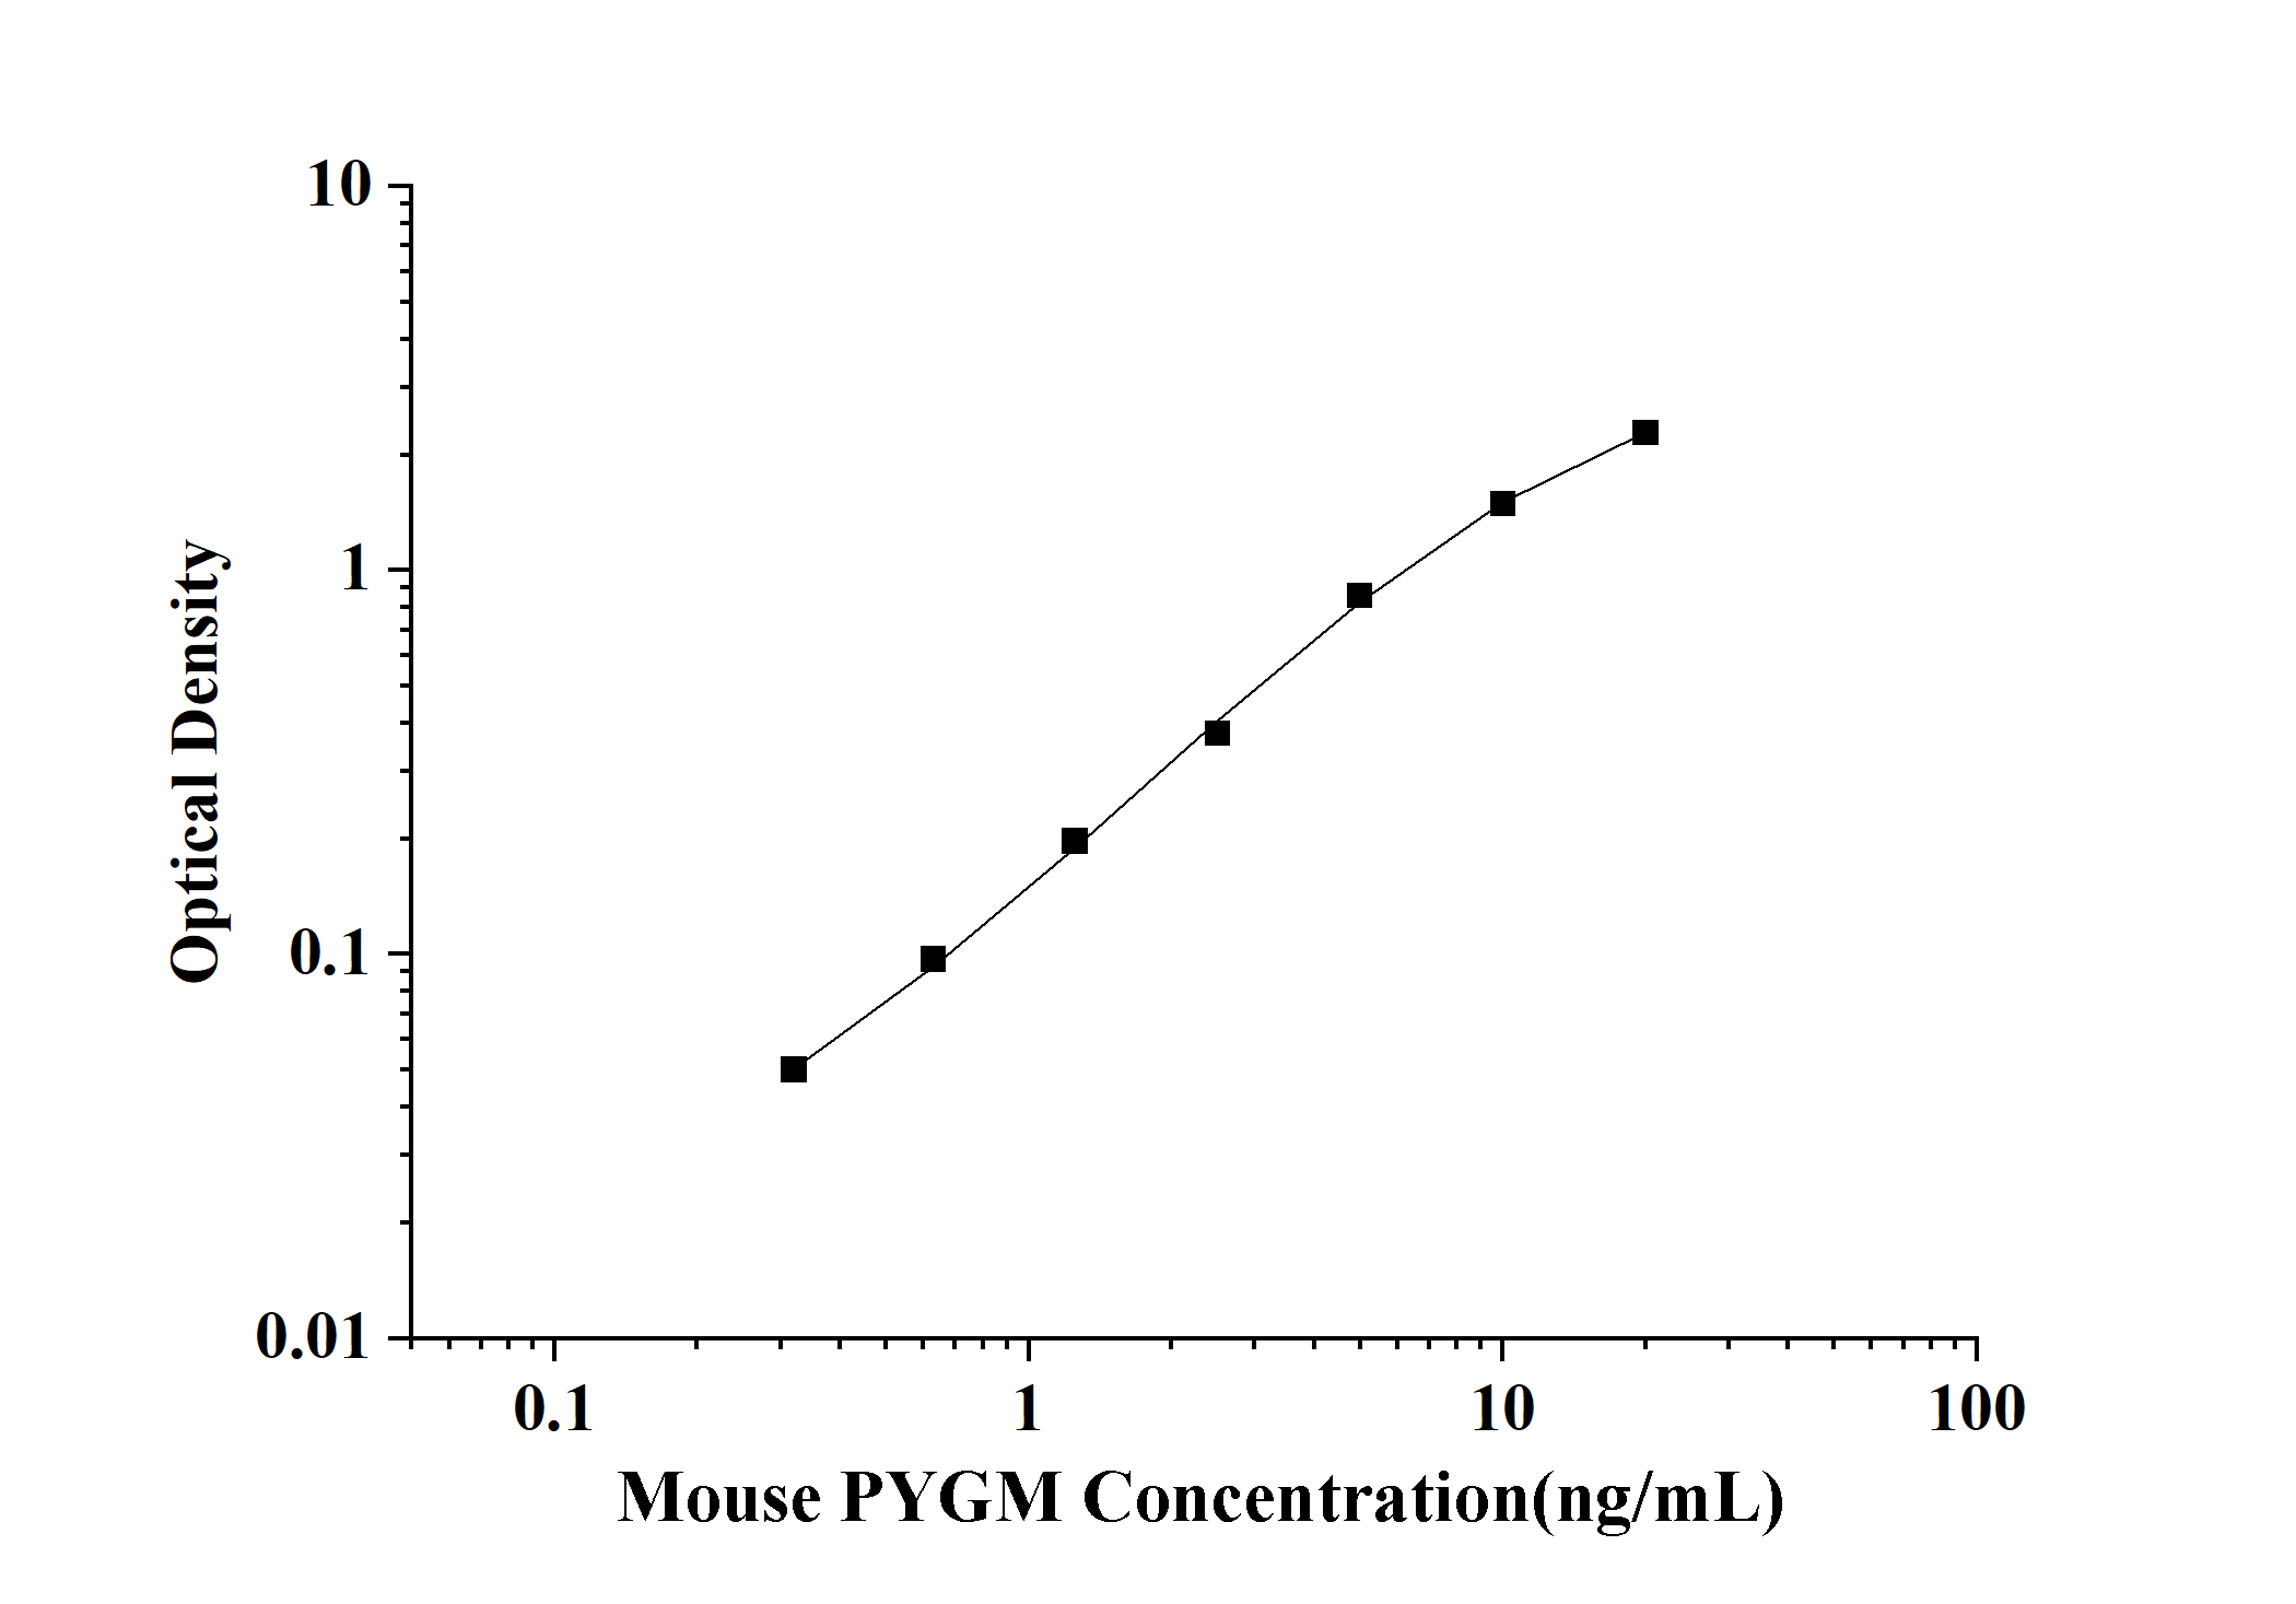 Mouse PYGM(Glycogen Phosphorylase, Muscle) ELISA Kit